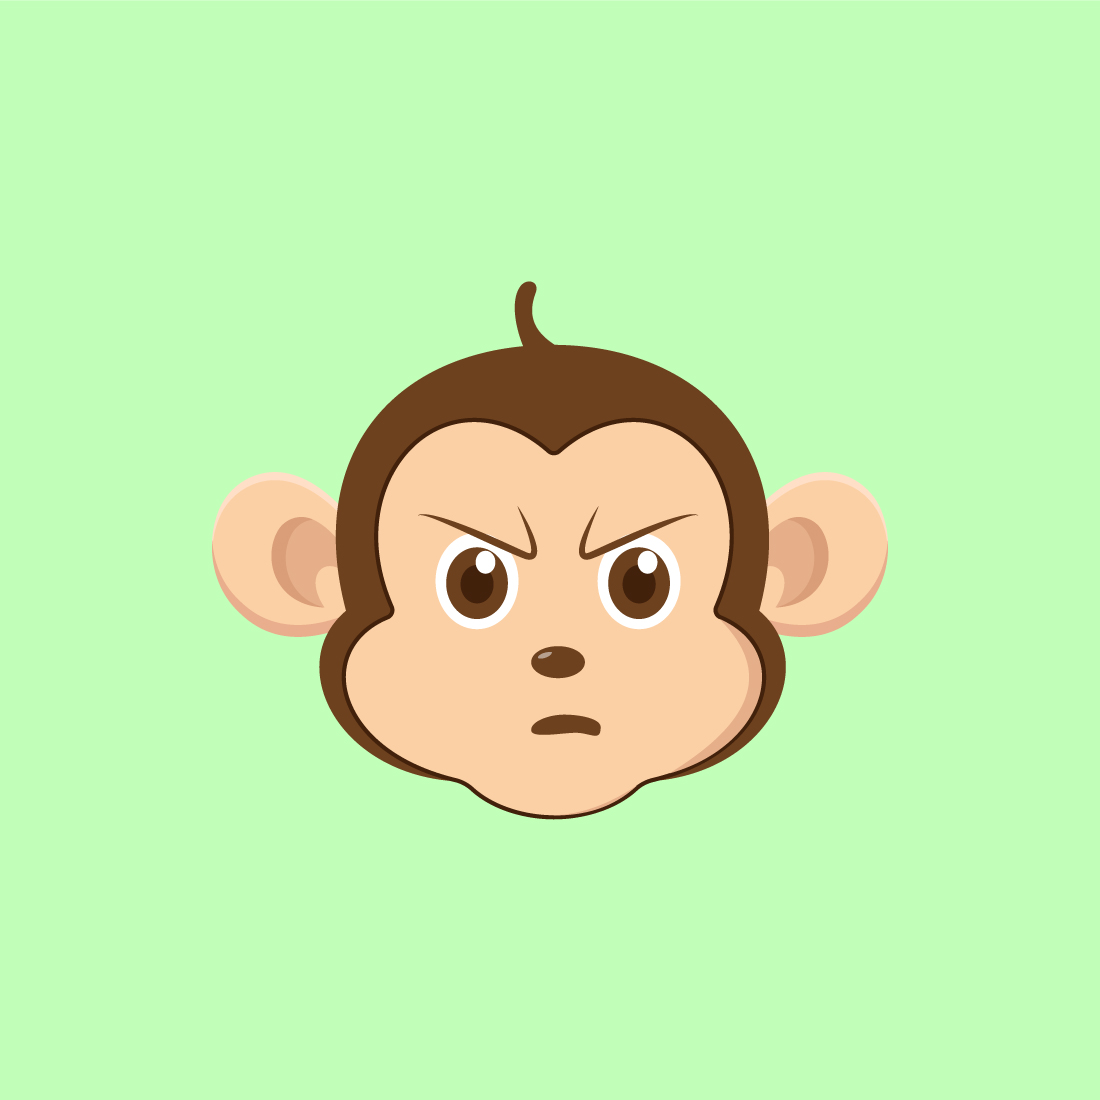 7 cute monkey faces 08